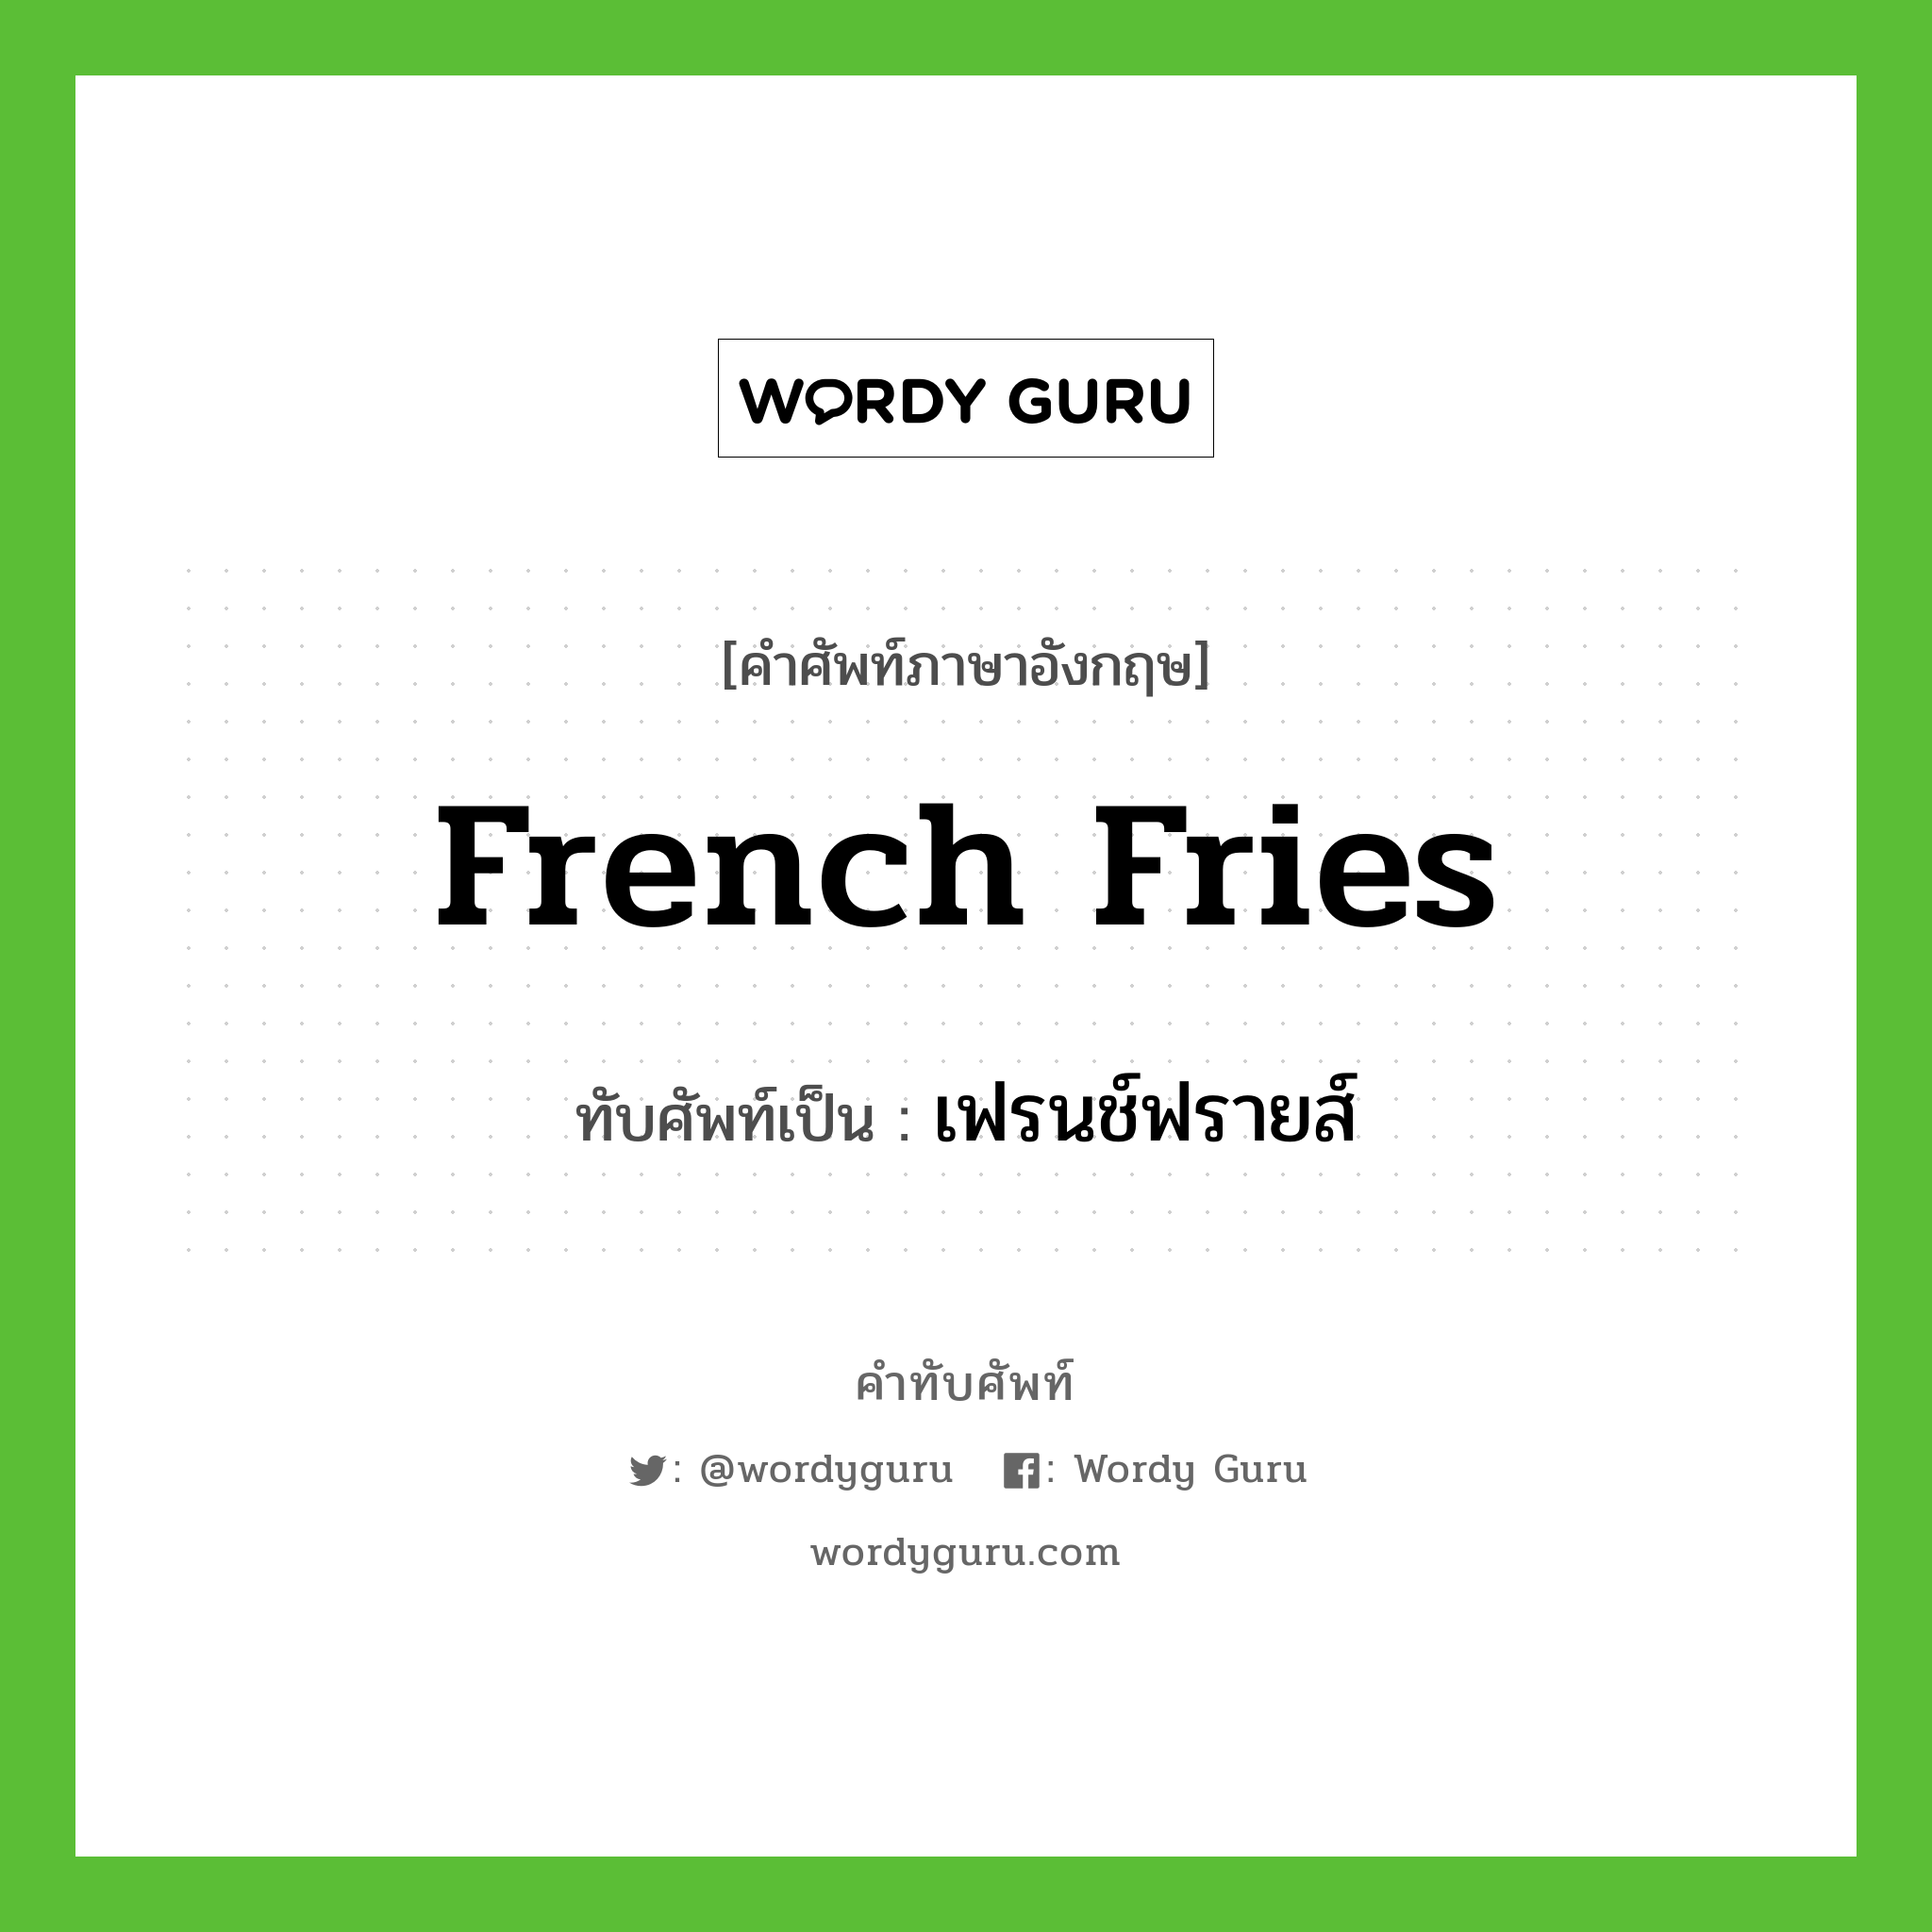 french fries เขียนเป็นคำไทยว่าอะไร?, คำศัพท์ภาษาอังกฤษ french fries ทับศัพท์เป็น เฟรนช์ฟรายส์